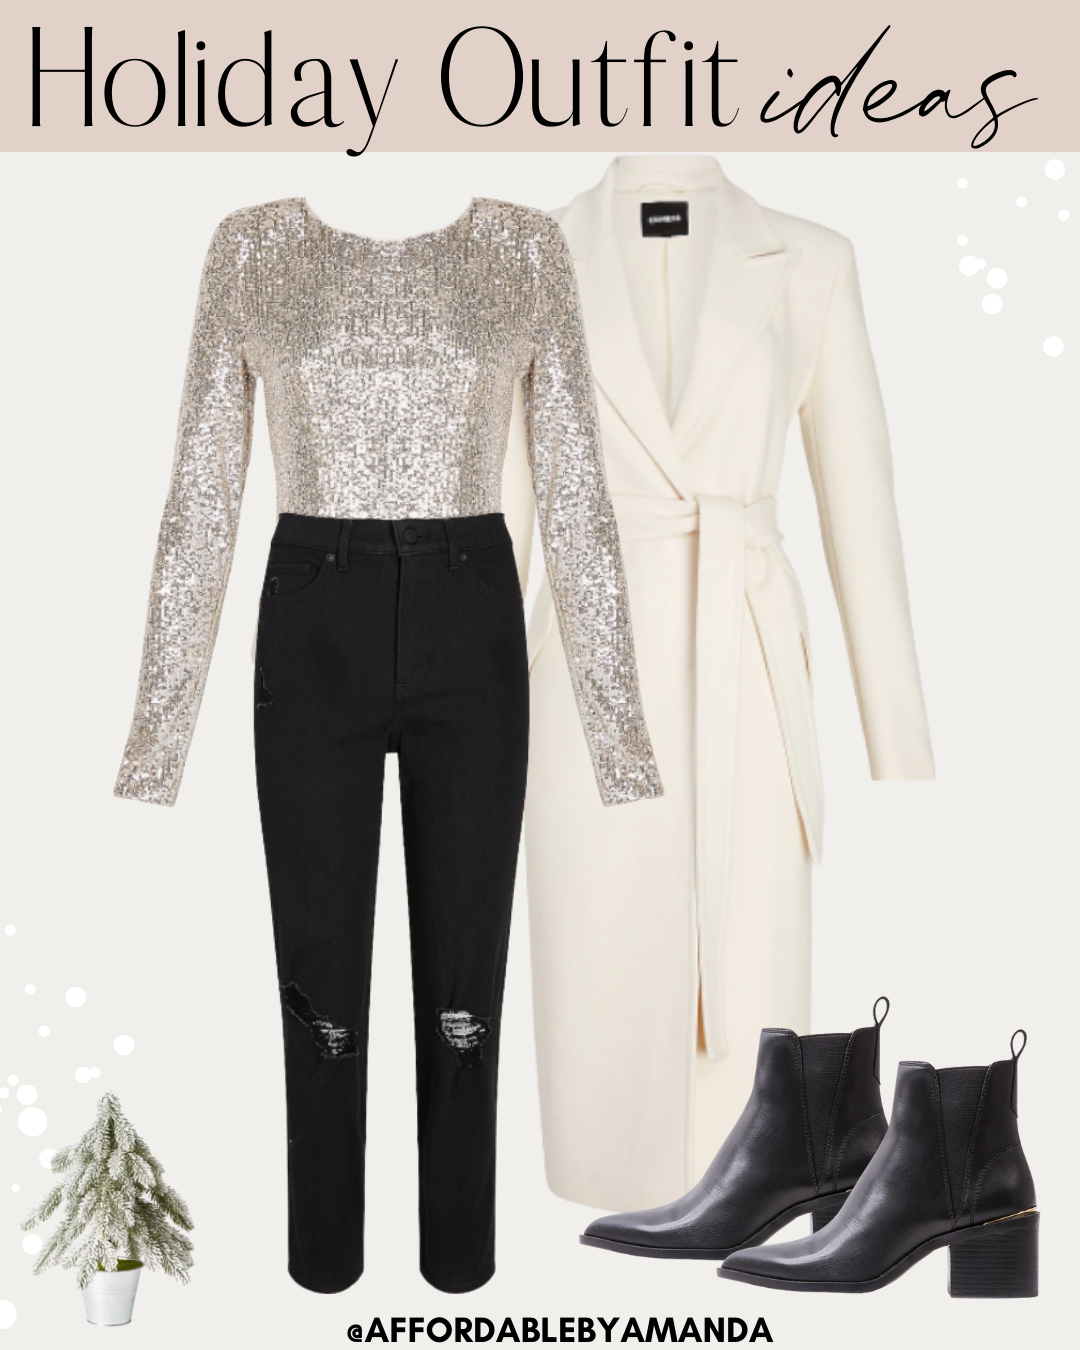 Sequin Bodysuit, White Coat, Black Jeans, Black Ankle Boots - Affordable by Amanda